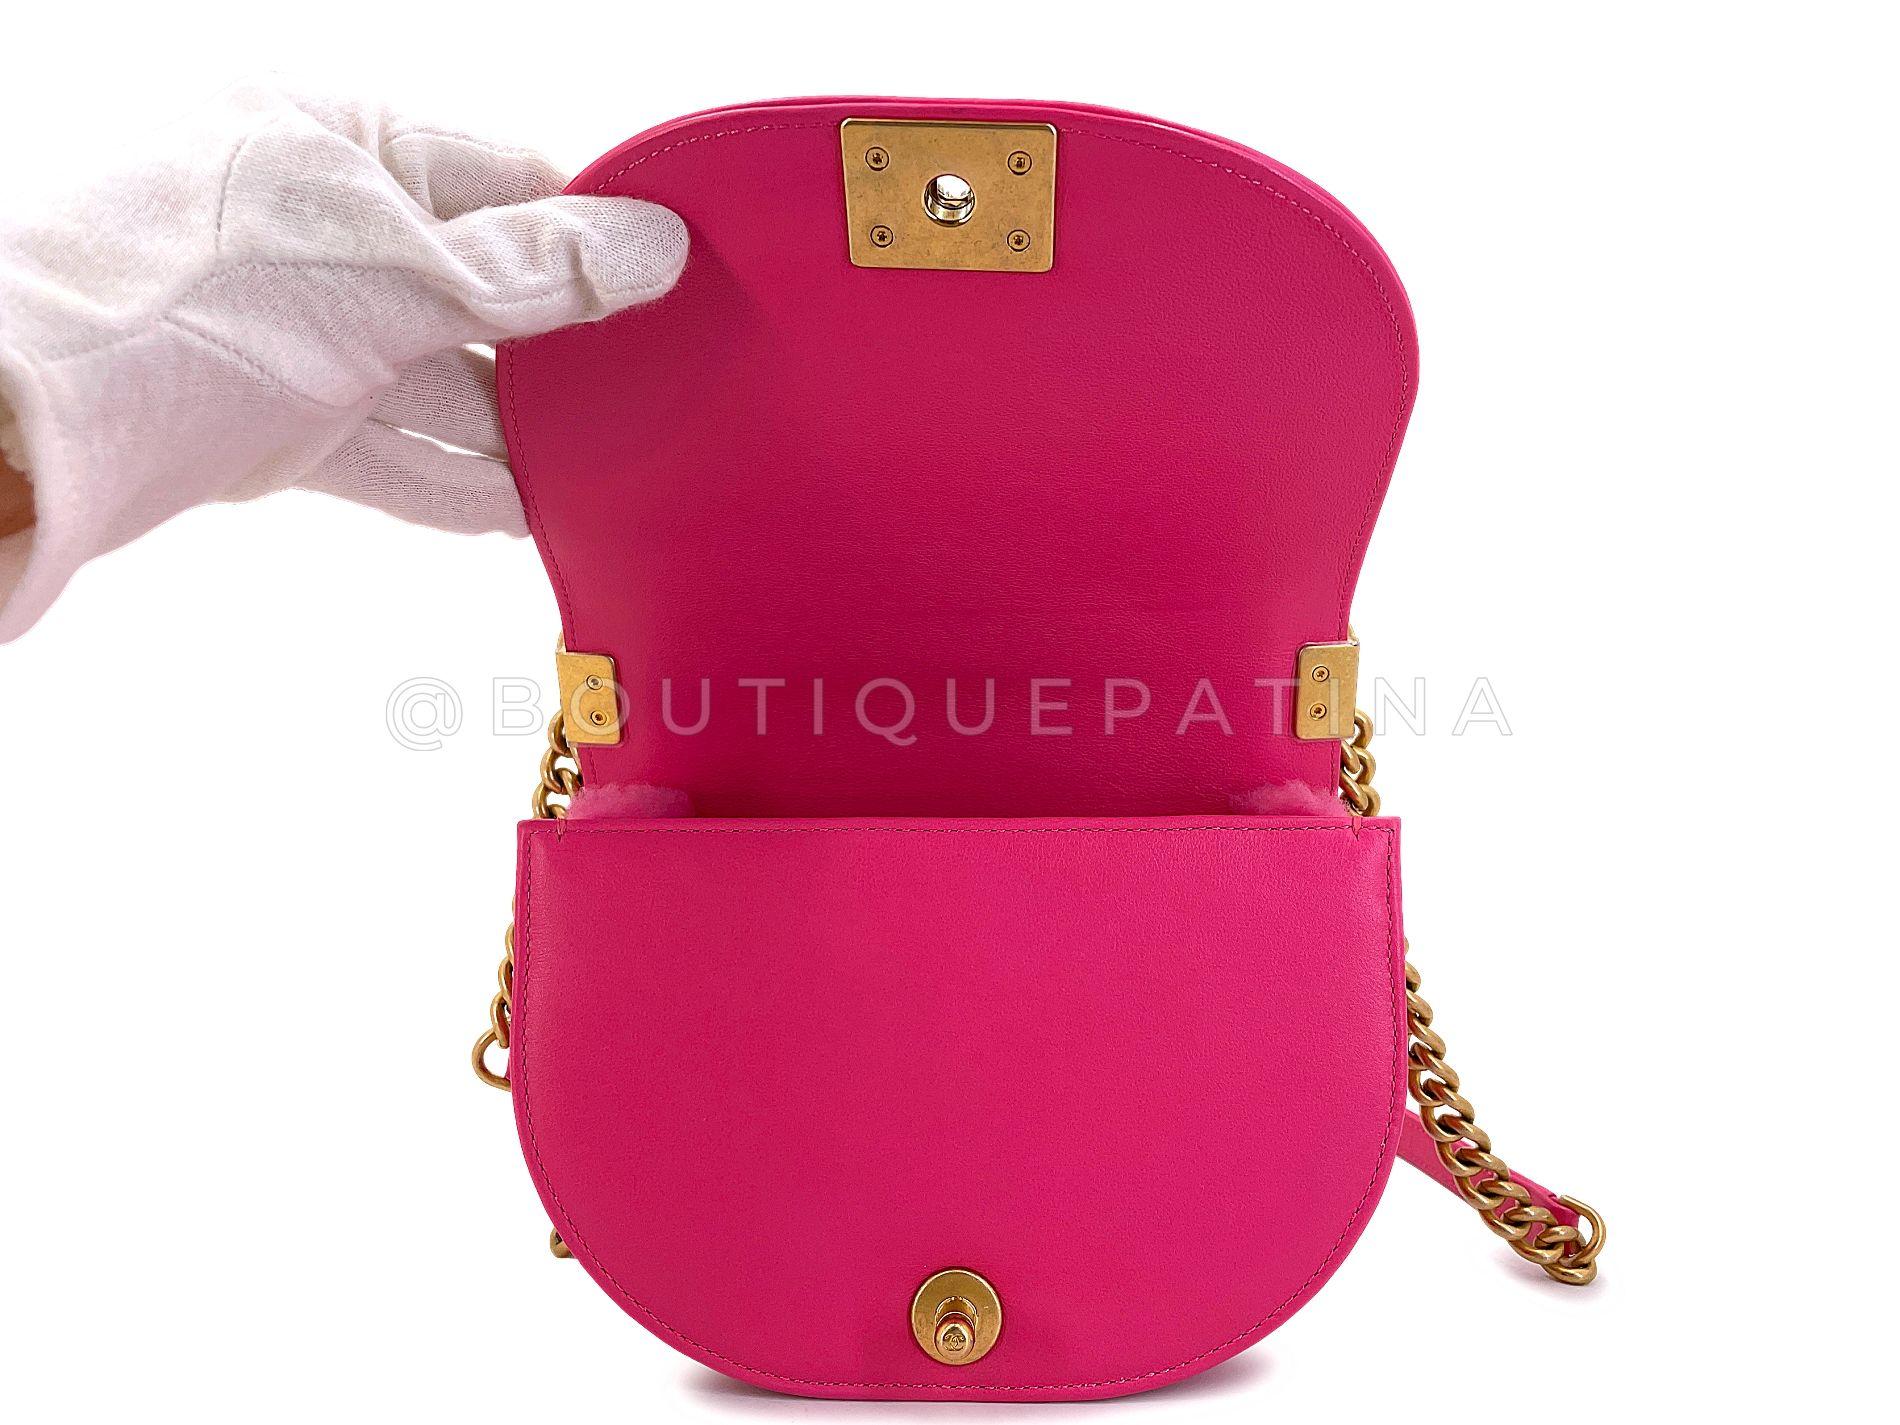 Chanel Fuchsia Pink Shearling Round Boy Flap Bag GHW 67885 For Sale 6